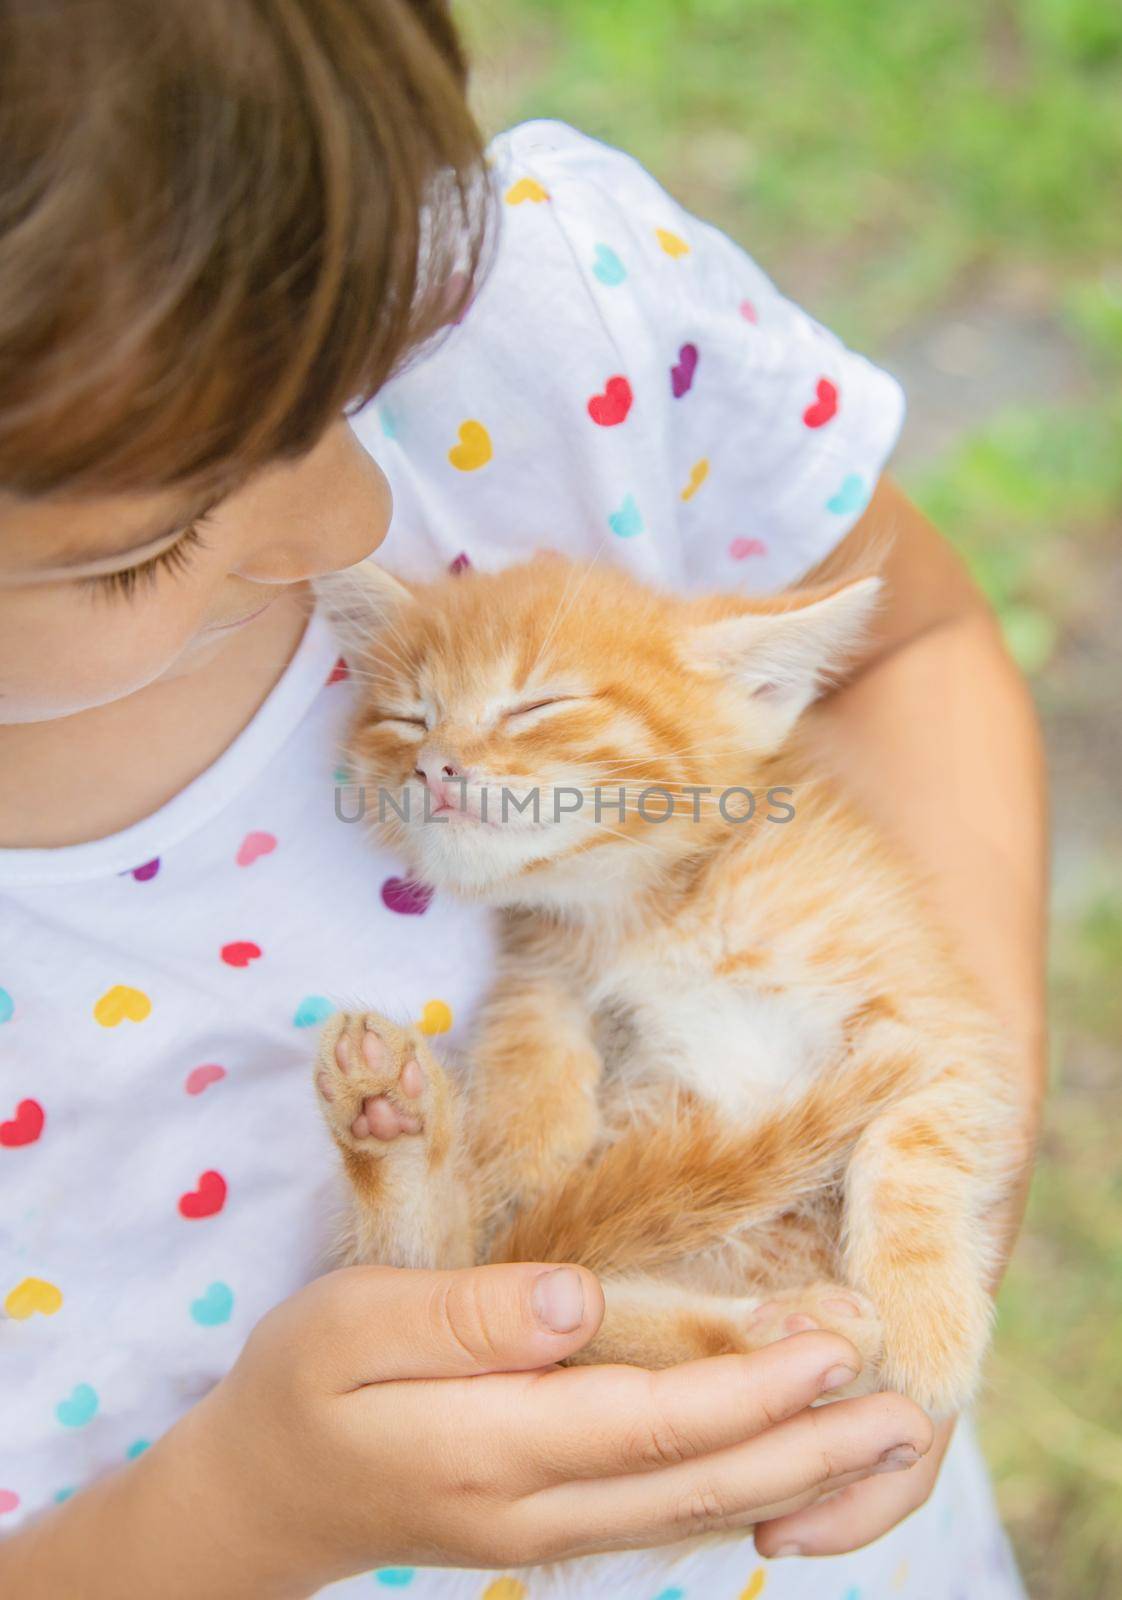 Little kittens in the hands of children. Selective focus. by yanadjana